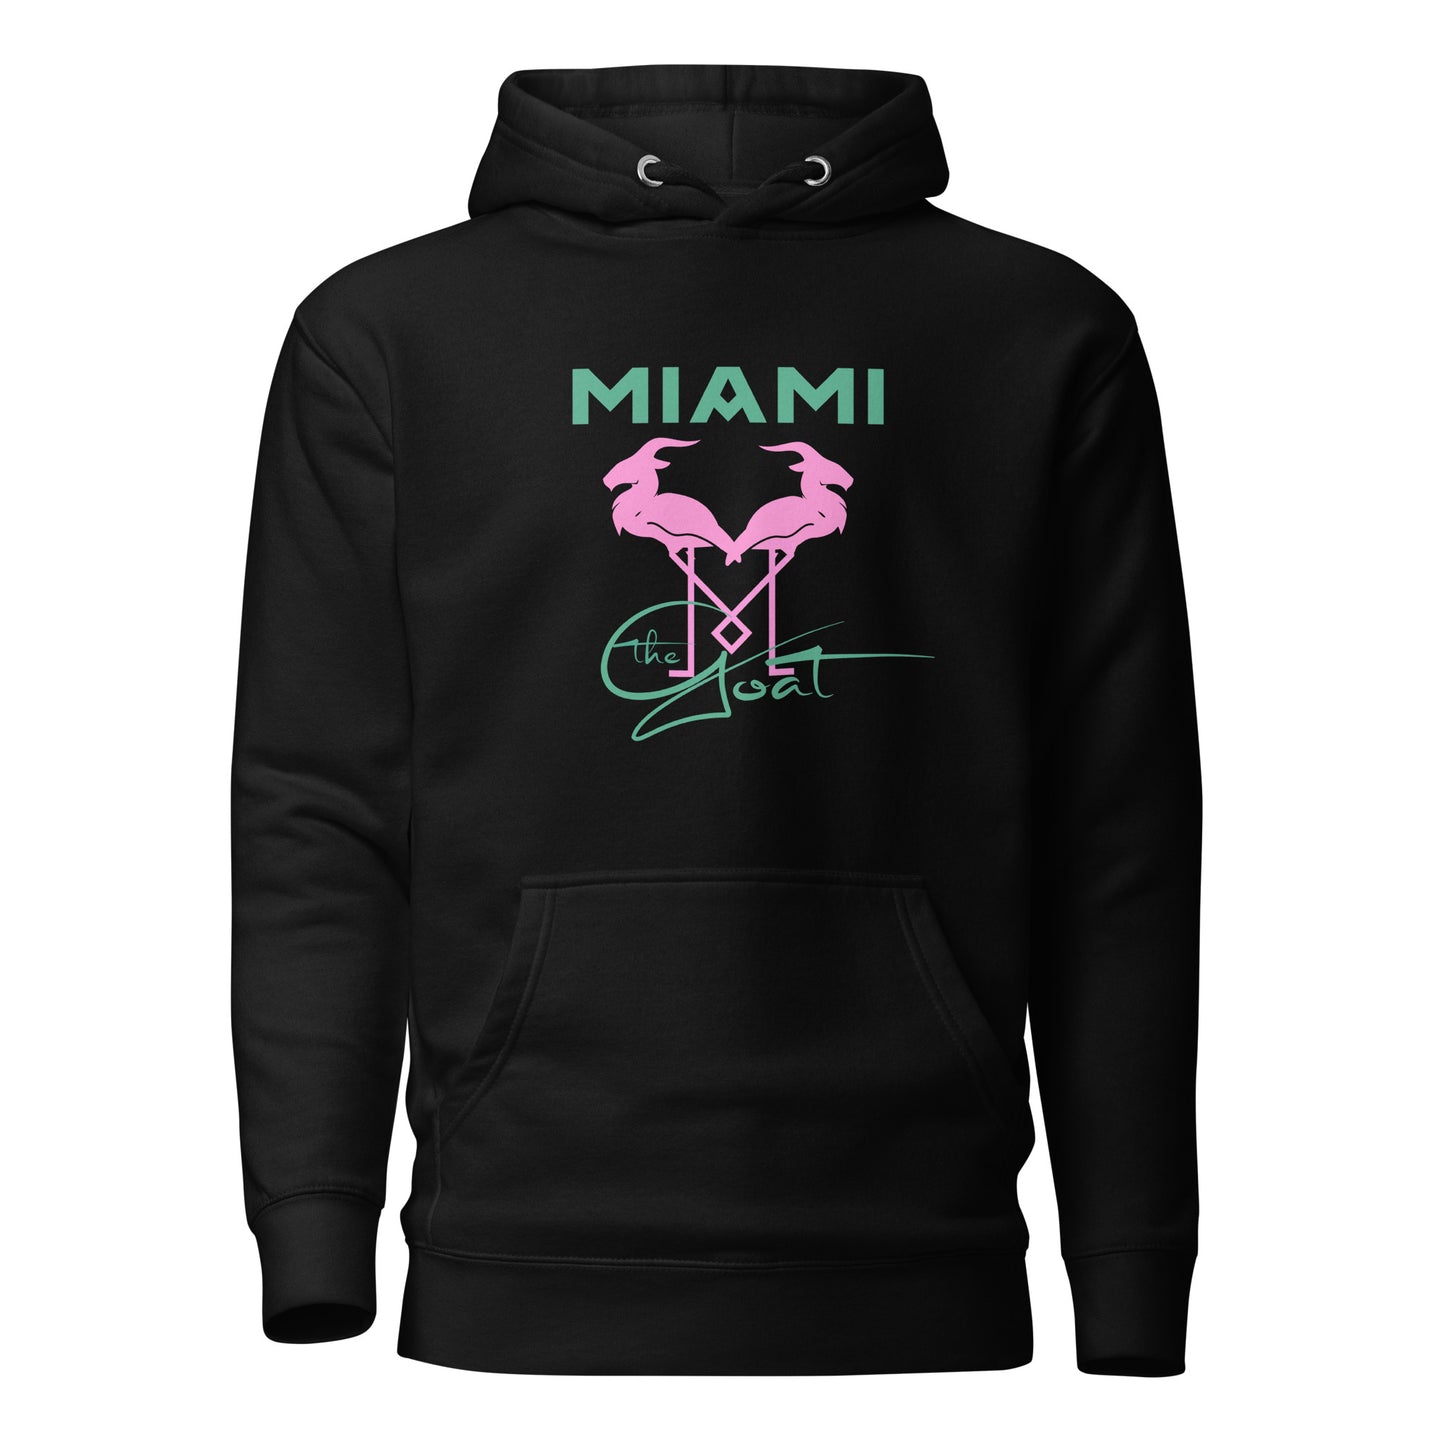 The Miami Goat